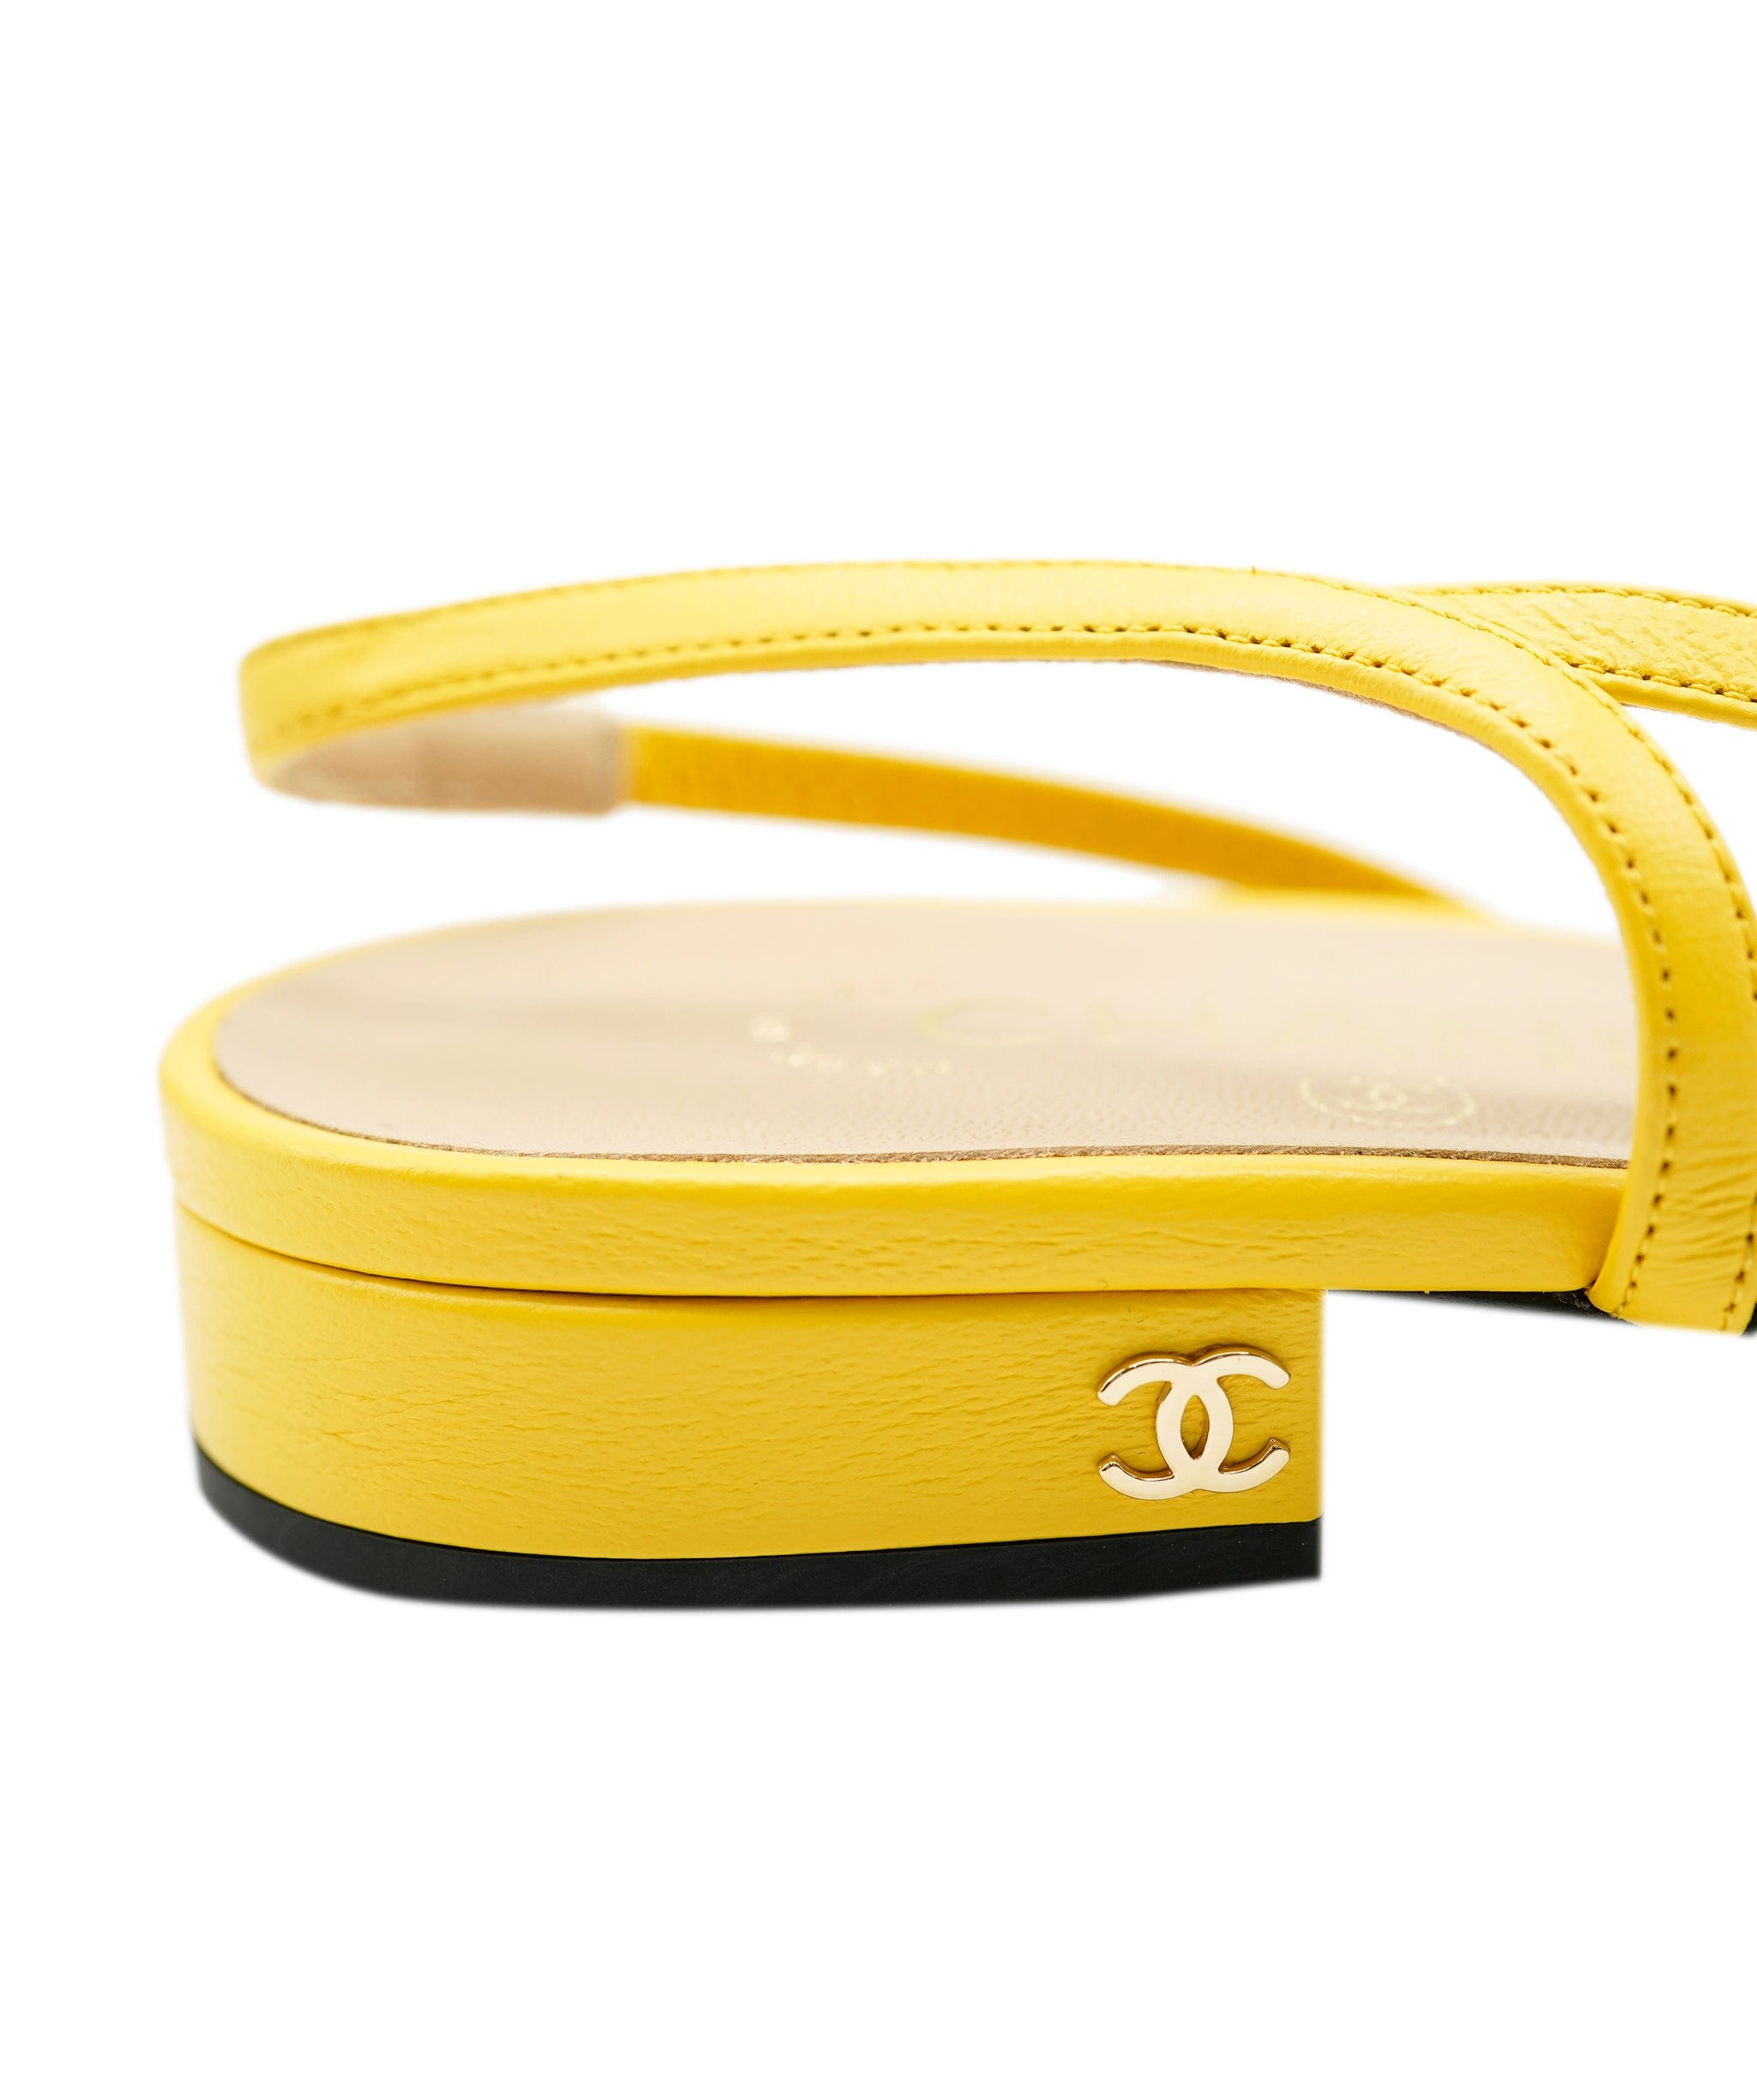 Chanel Chanel yellow slingbacks 40 - AJC0124